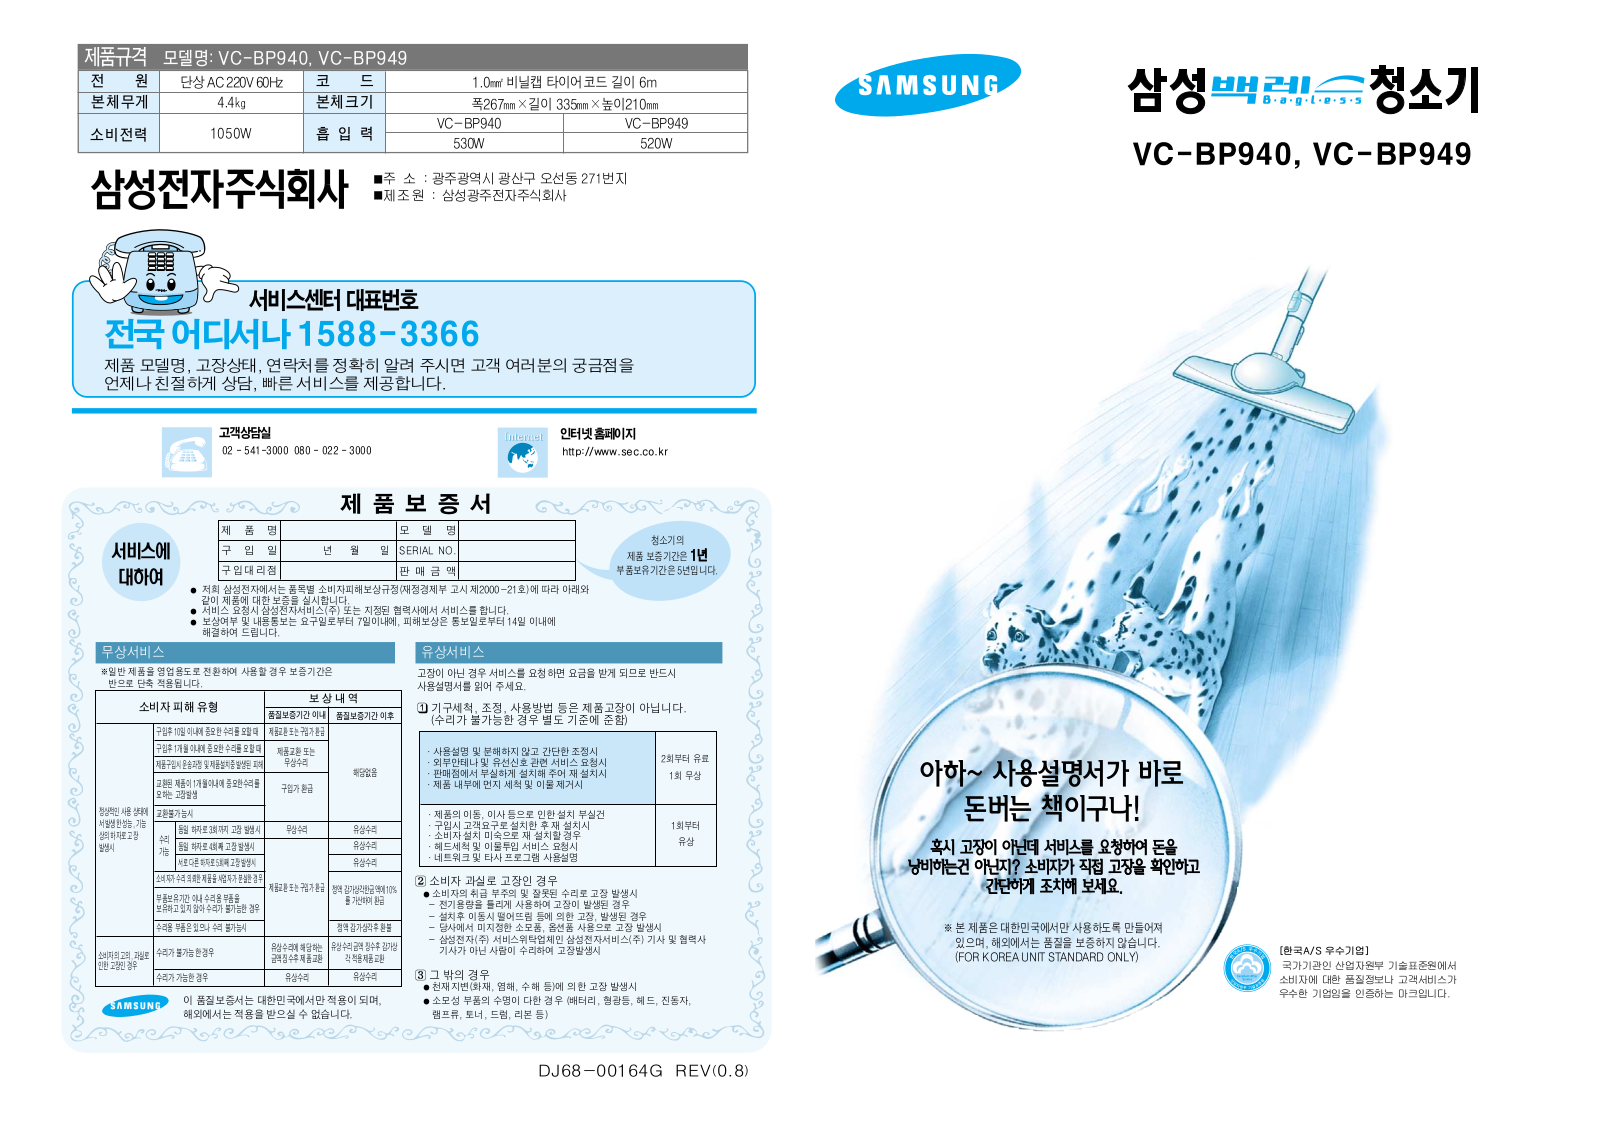 Samsung VC-BP949, VC-BP940 User Manual